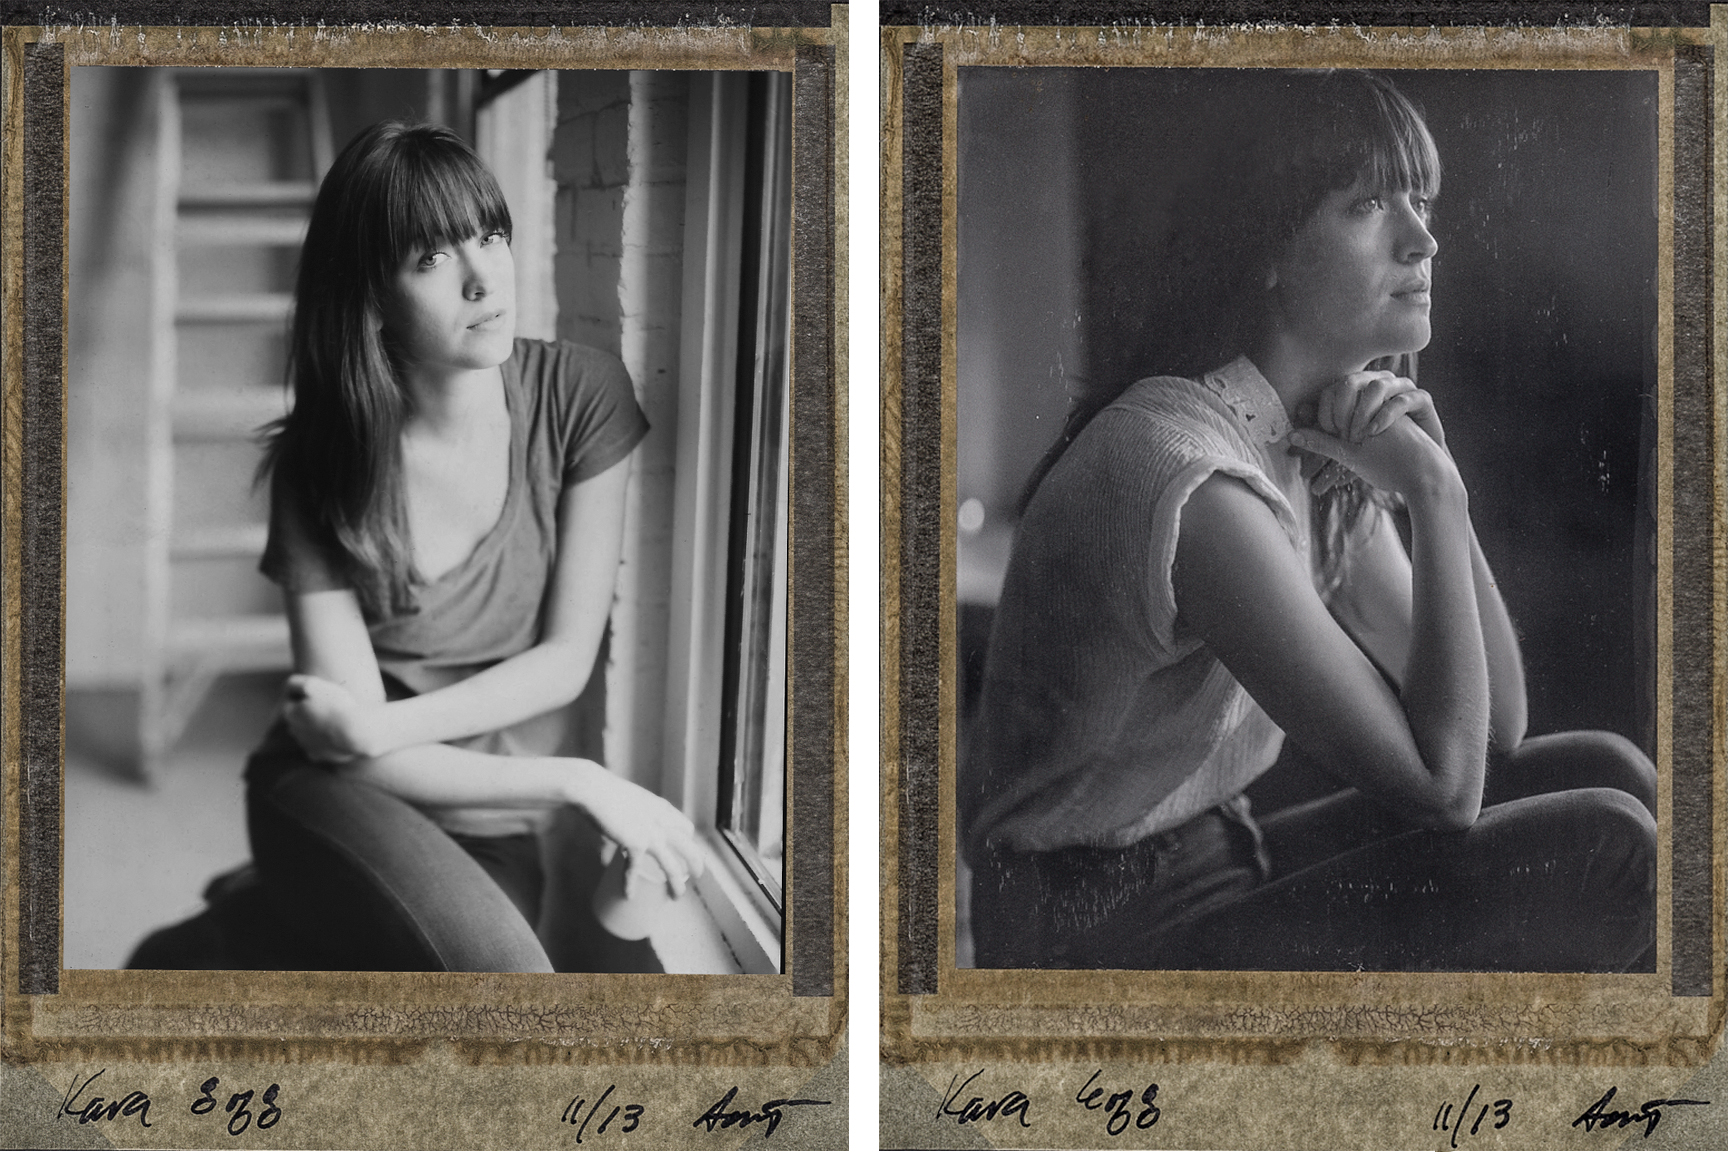 Polaroid of young woman near a window